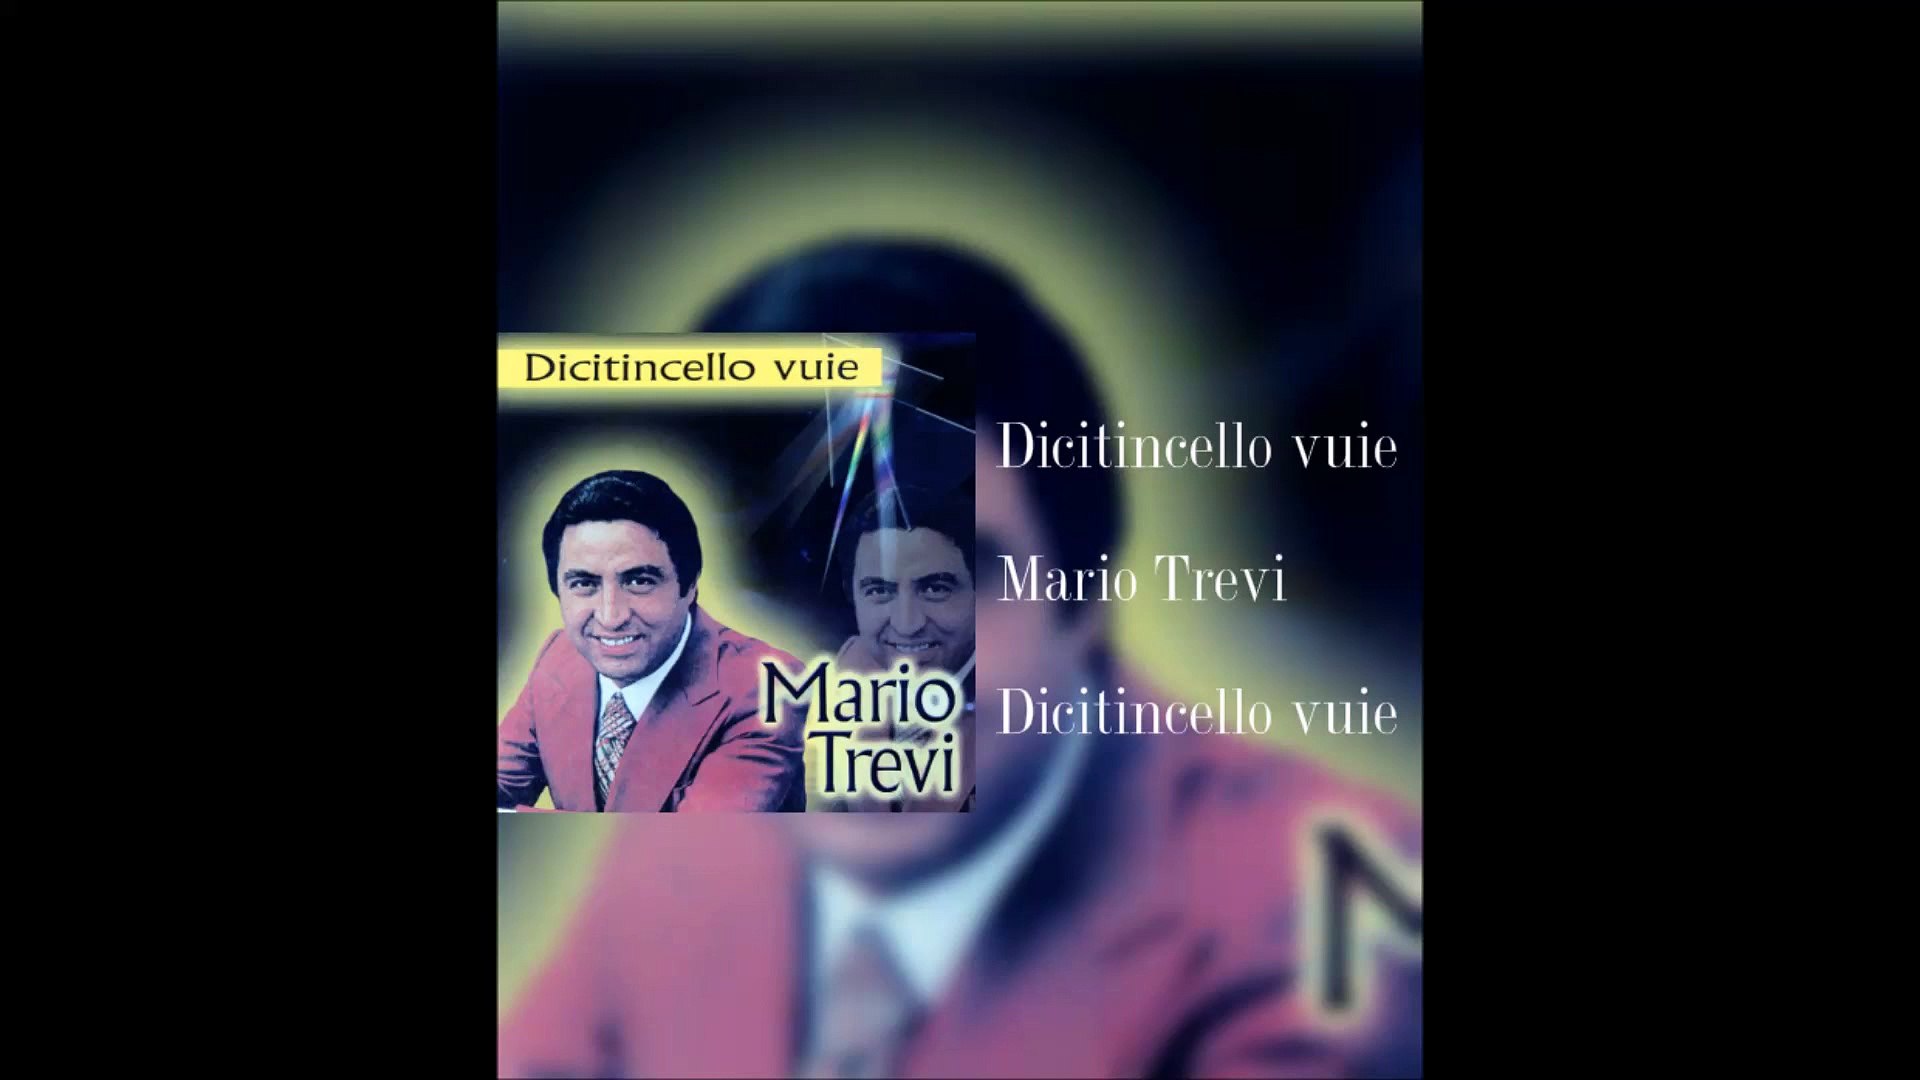 Mario Trevi - Dicitincello vuie [full album] - Video Dailymotion